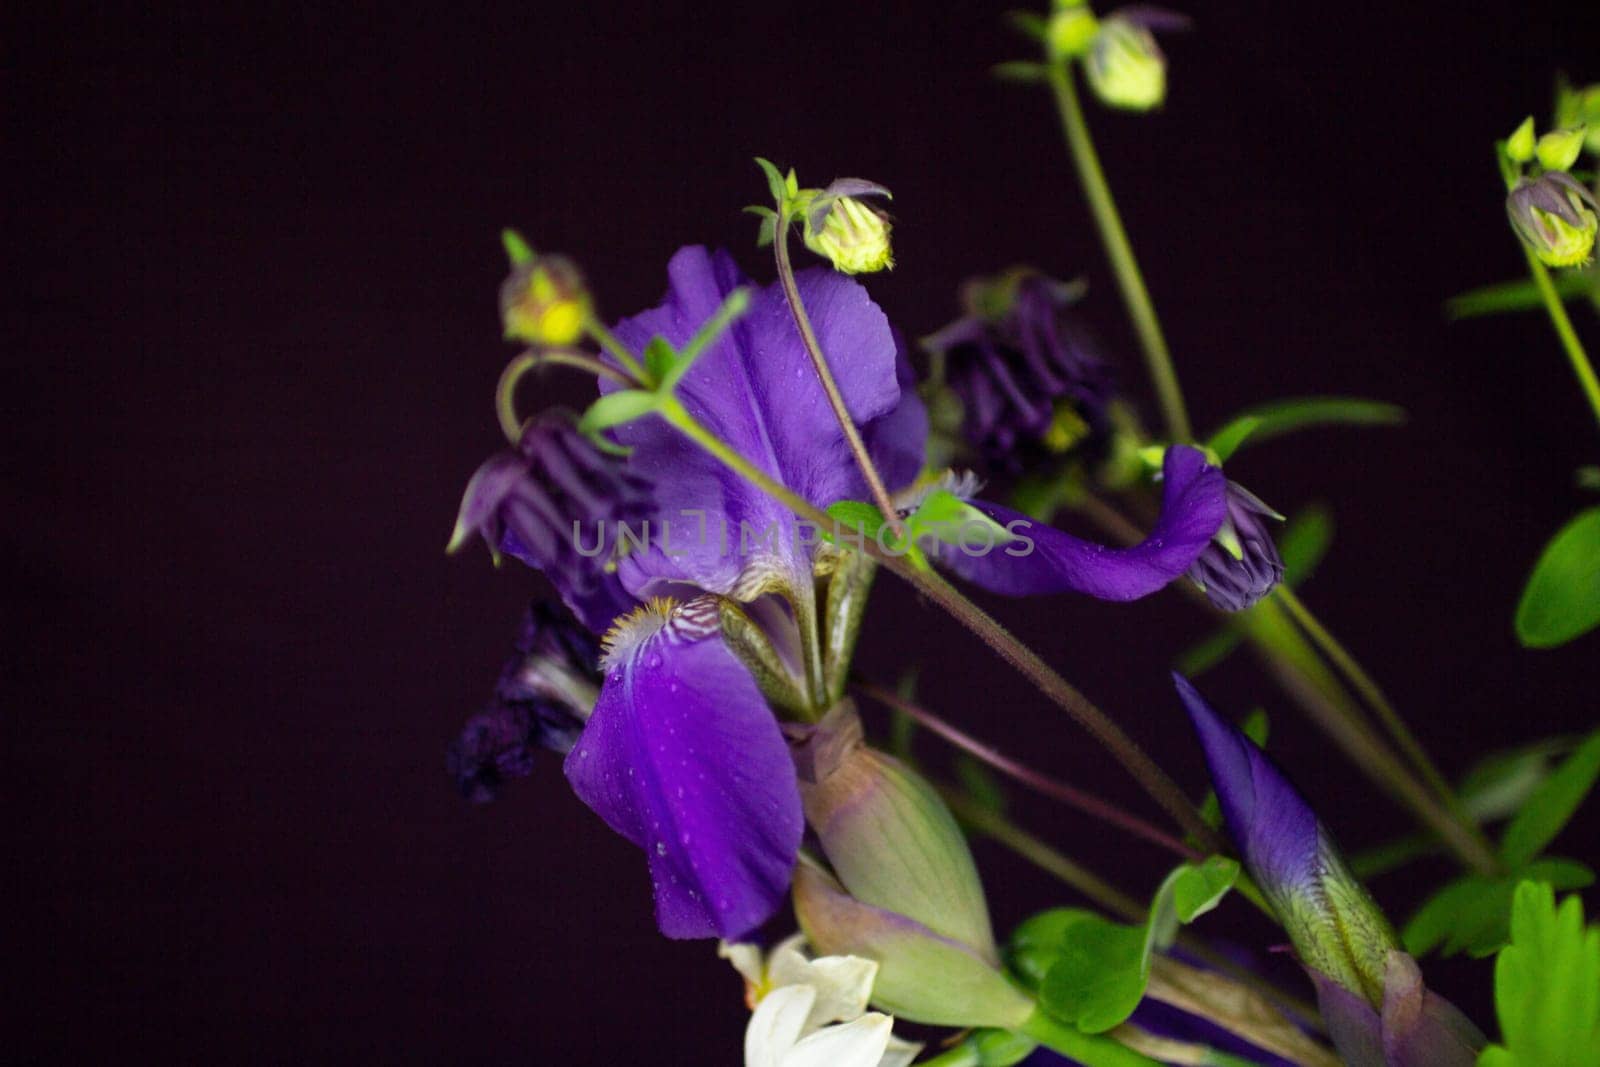 Iris flowers on a black background by VeronikaAngo